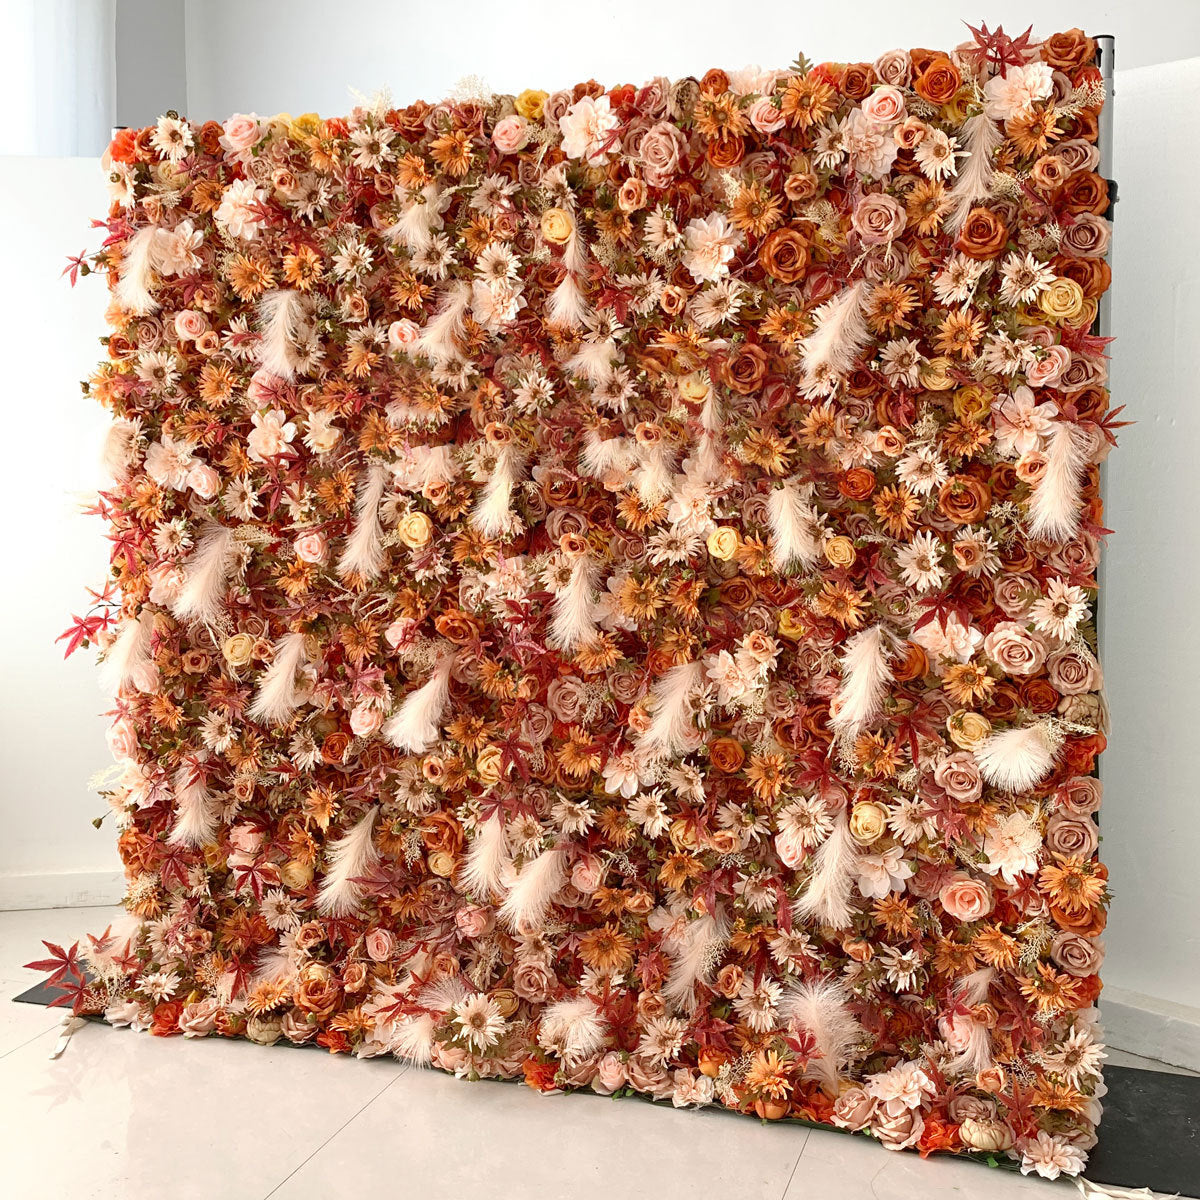 3D Artificial Flower Wall Arrangement Wedding Party Birthday Backdrop Decor HQ1155